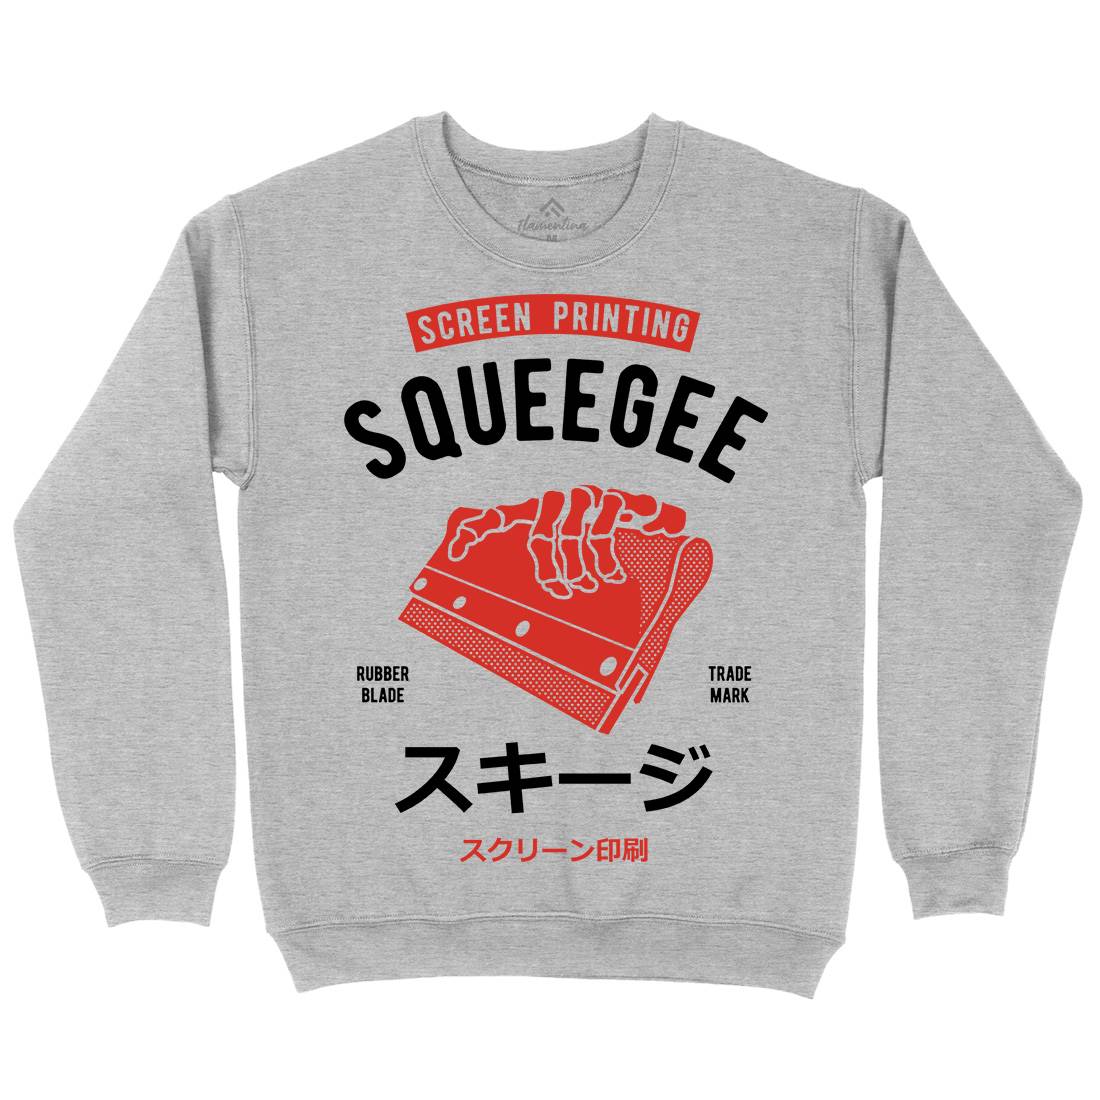 Squeegee Social Club Kids Crew Neck Sweatshirt Work A282